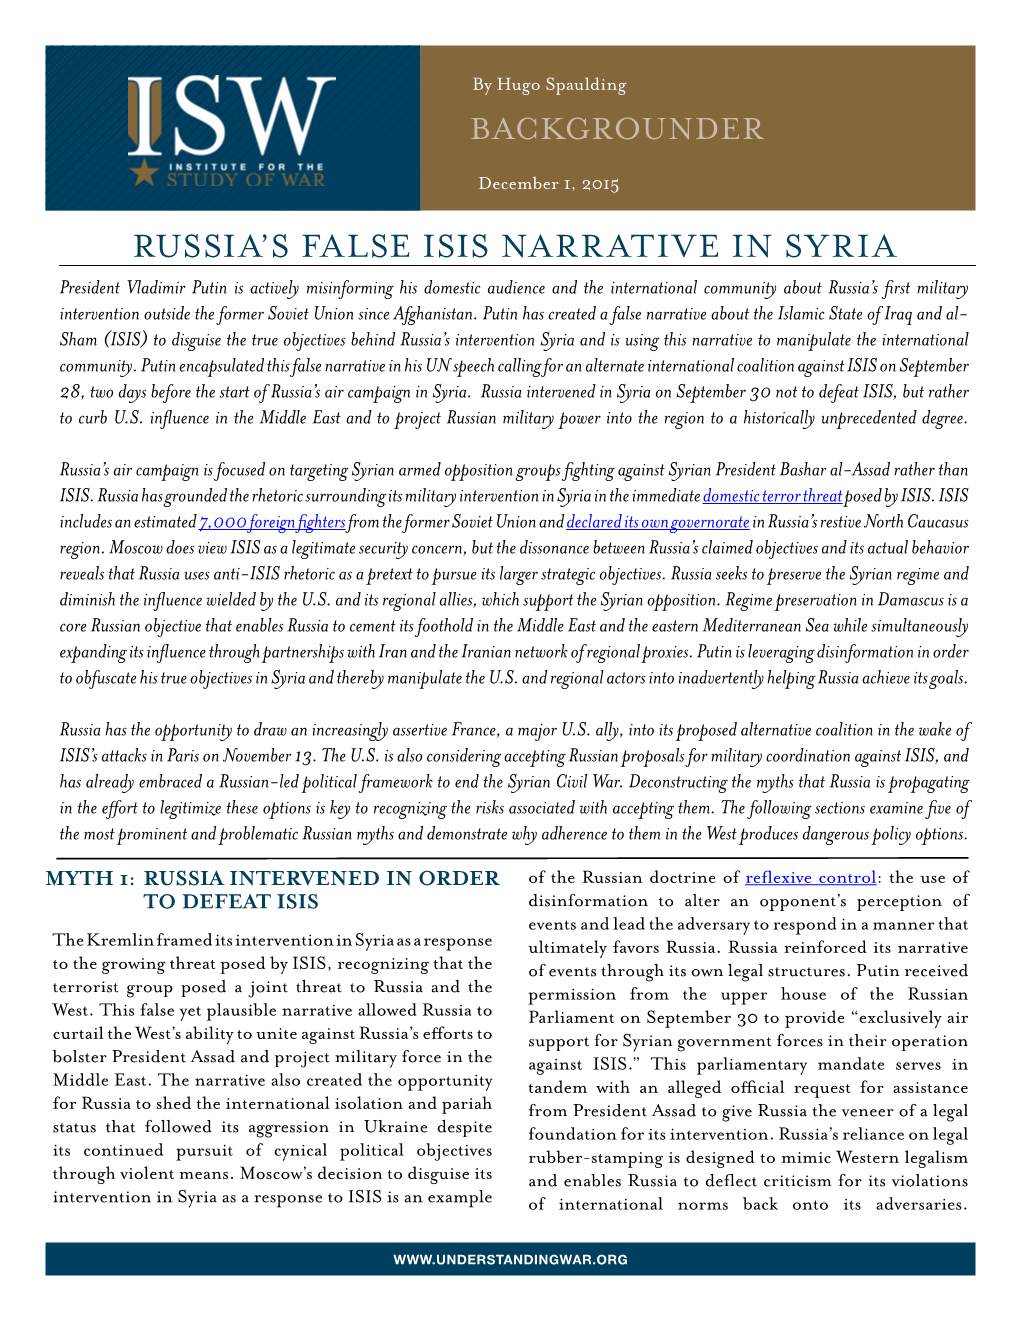 Russia's False Isis Narrative in Syria